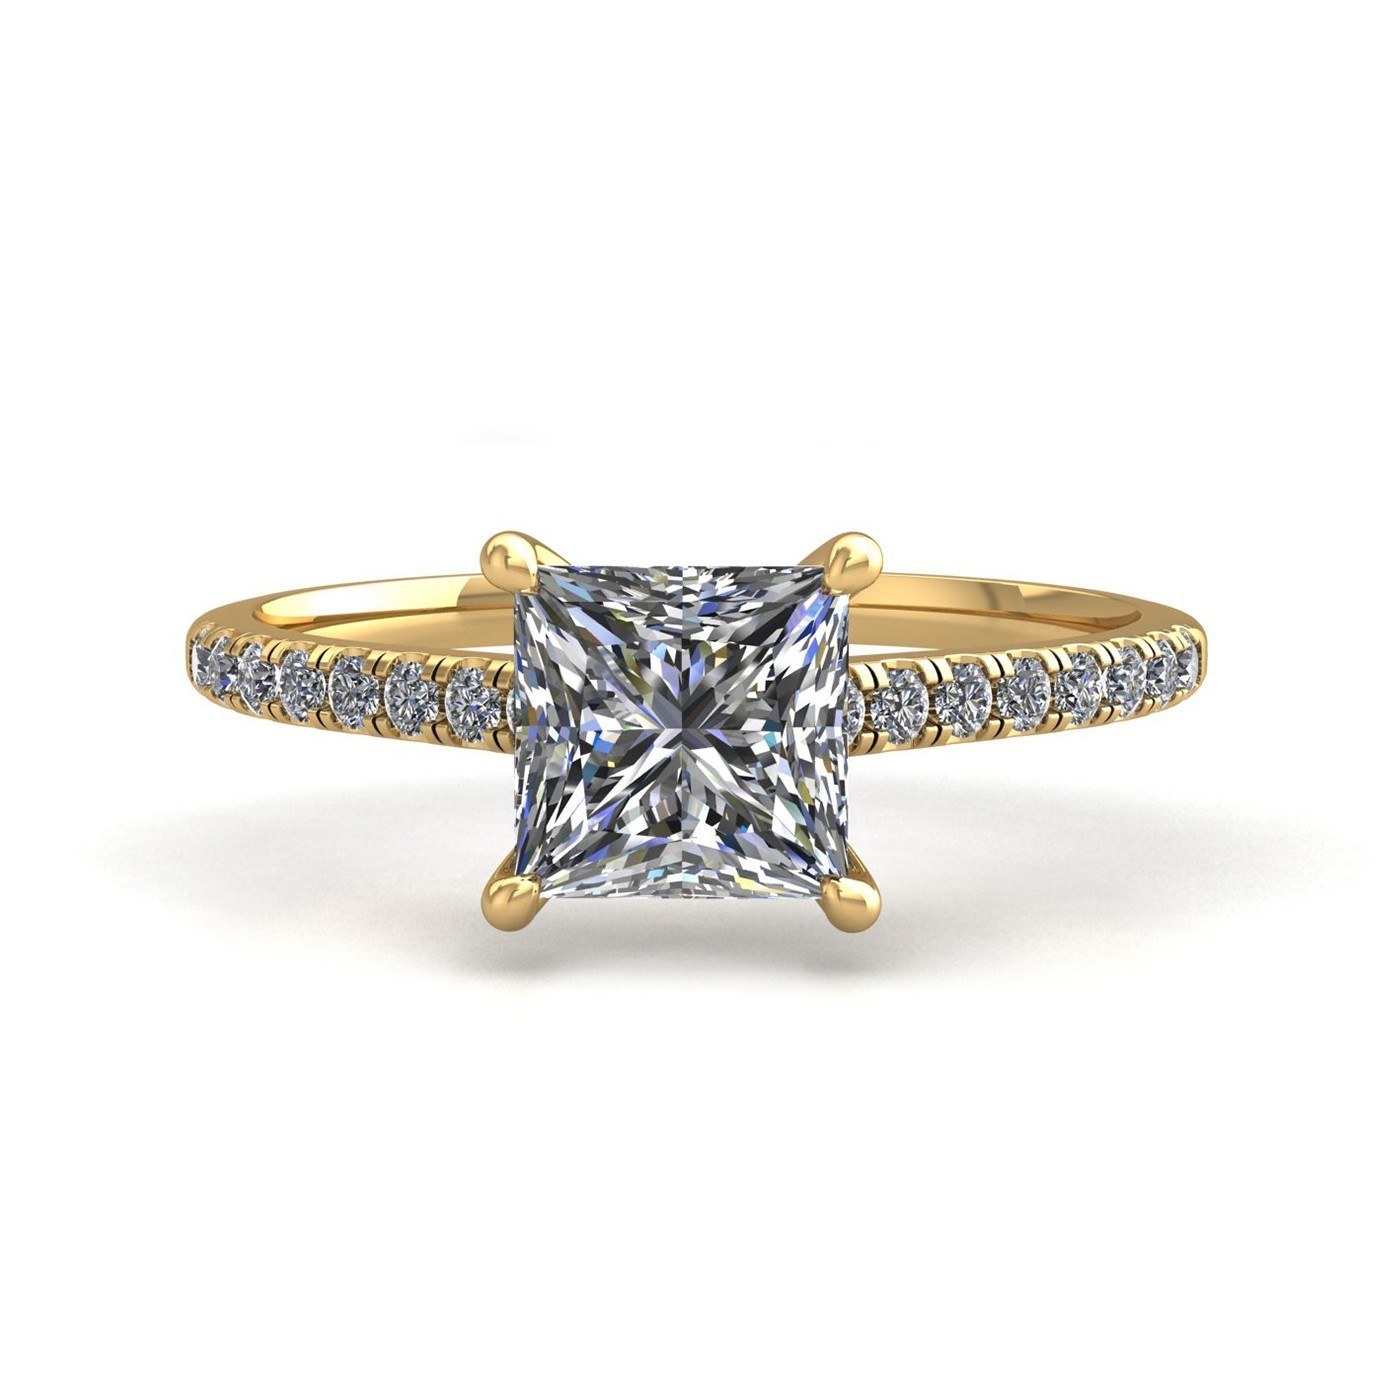 18k yellow gold 1,00 ct 4 prongs princess cut diamond engagement ring with whisper thin pavÉ set band